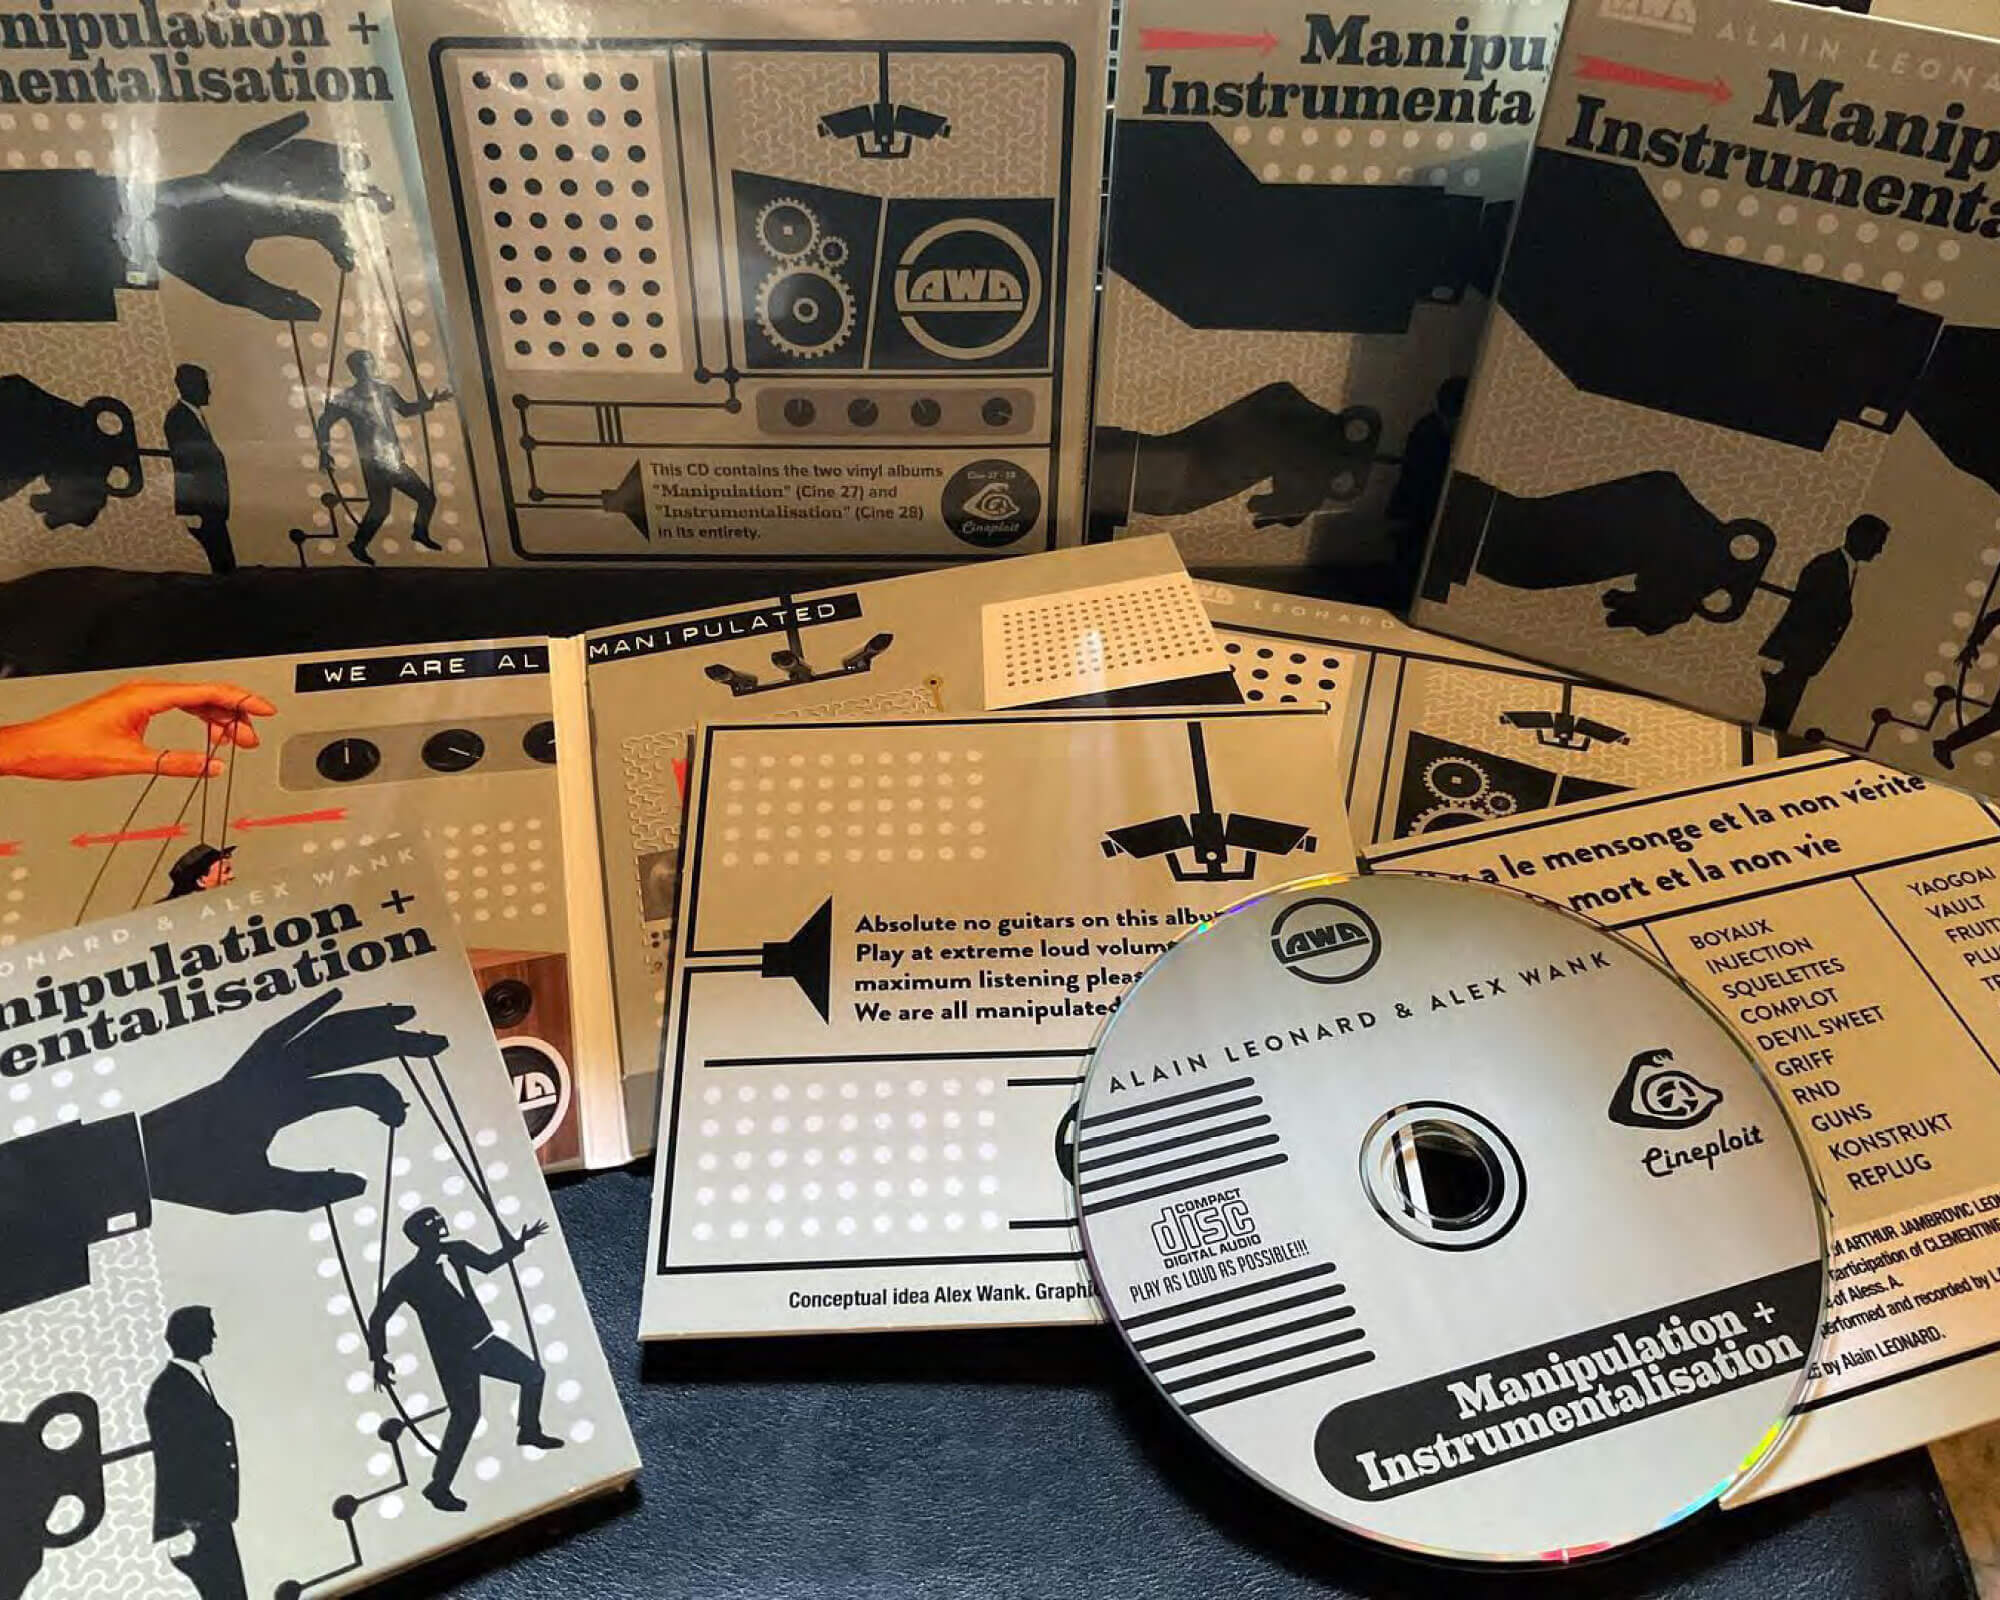 Cineploit Records: LAWA - Manipulation/Instrumentalisation